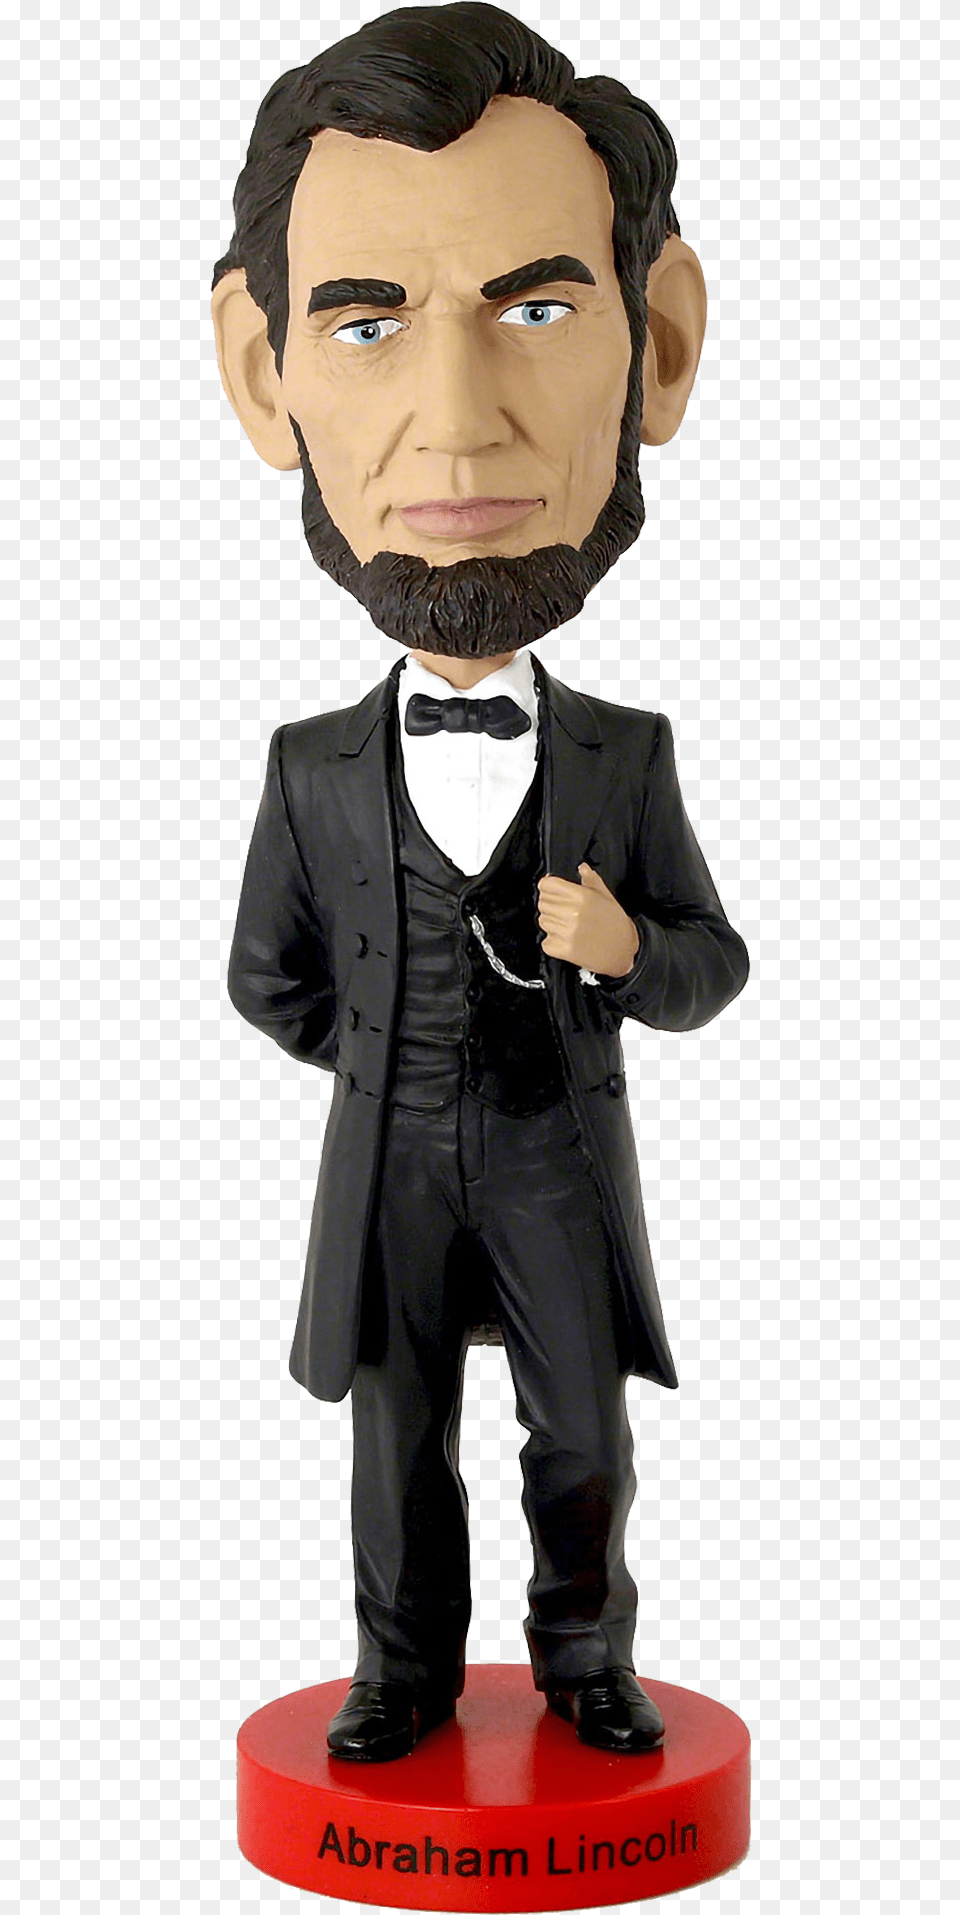 Royal Bobbles Abraham Lincoln Bobblehead Abraham Lincoln Bobblehead, Clothing, Coat, Figurine, Suit Png Image